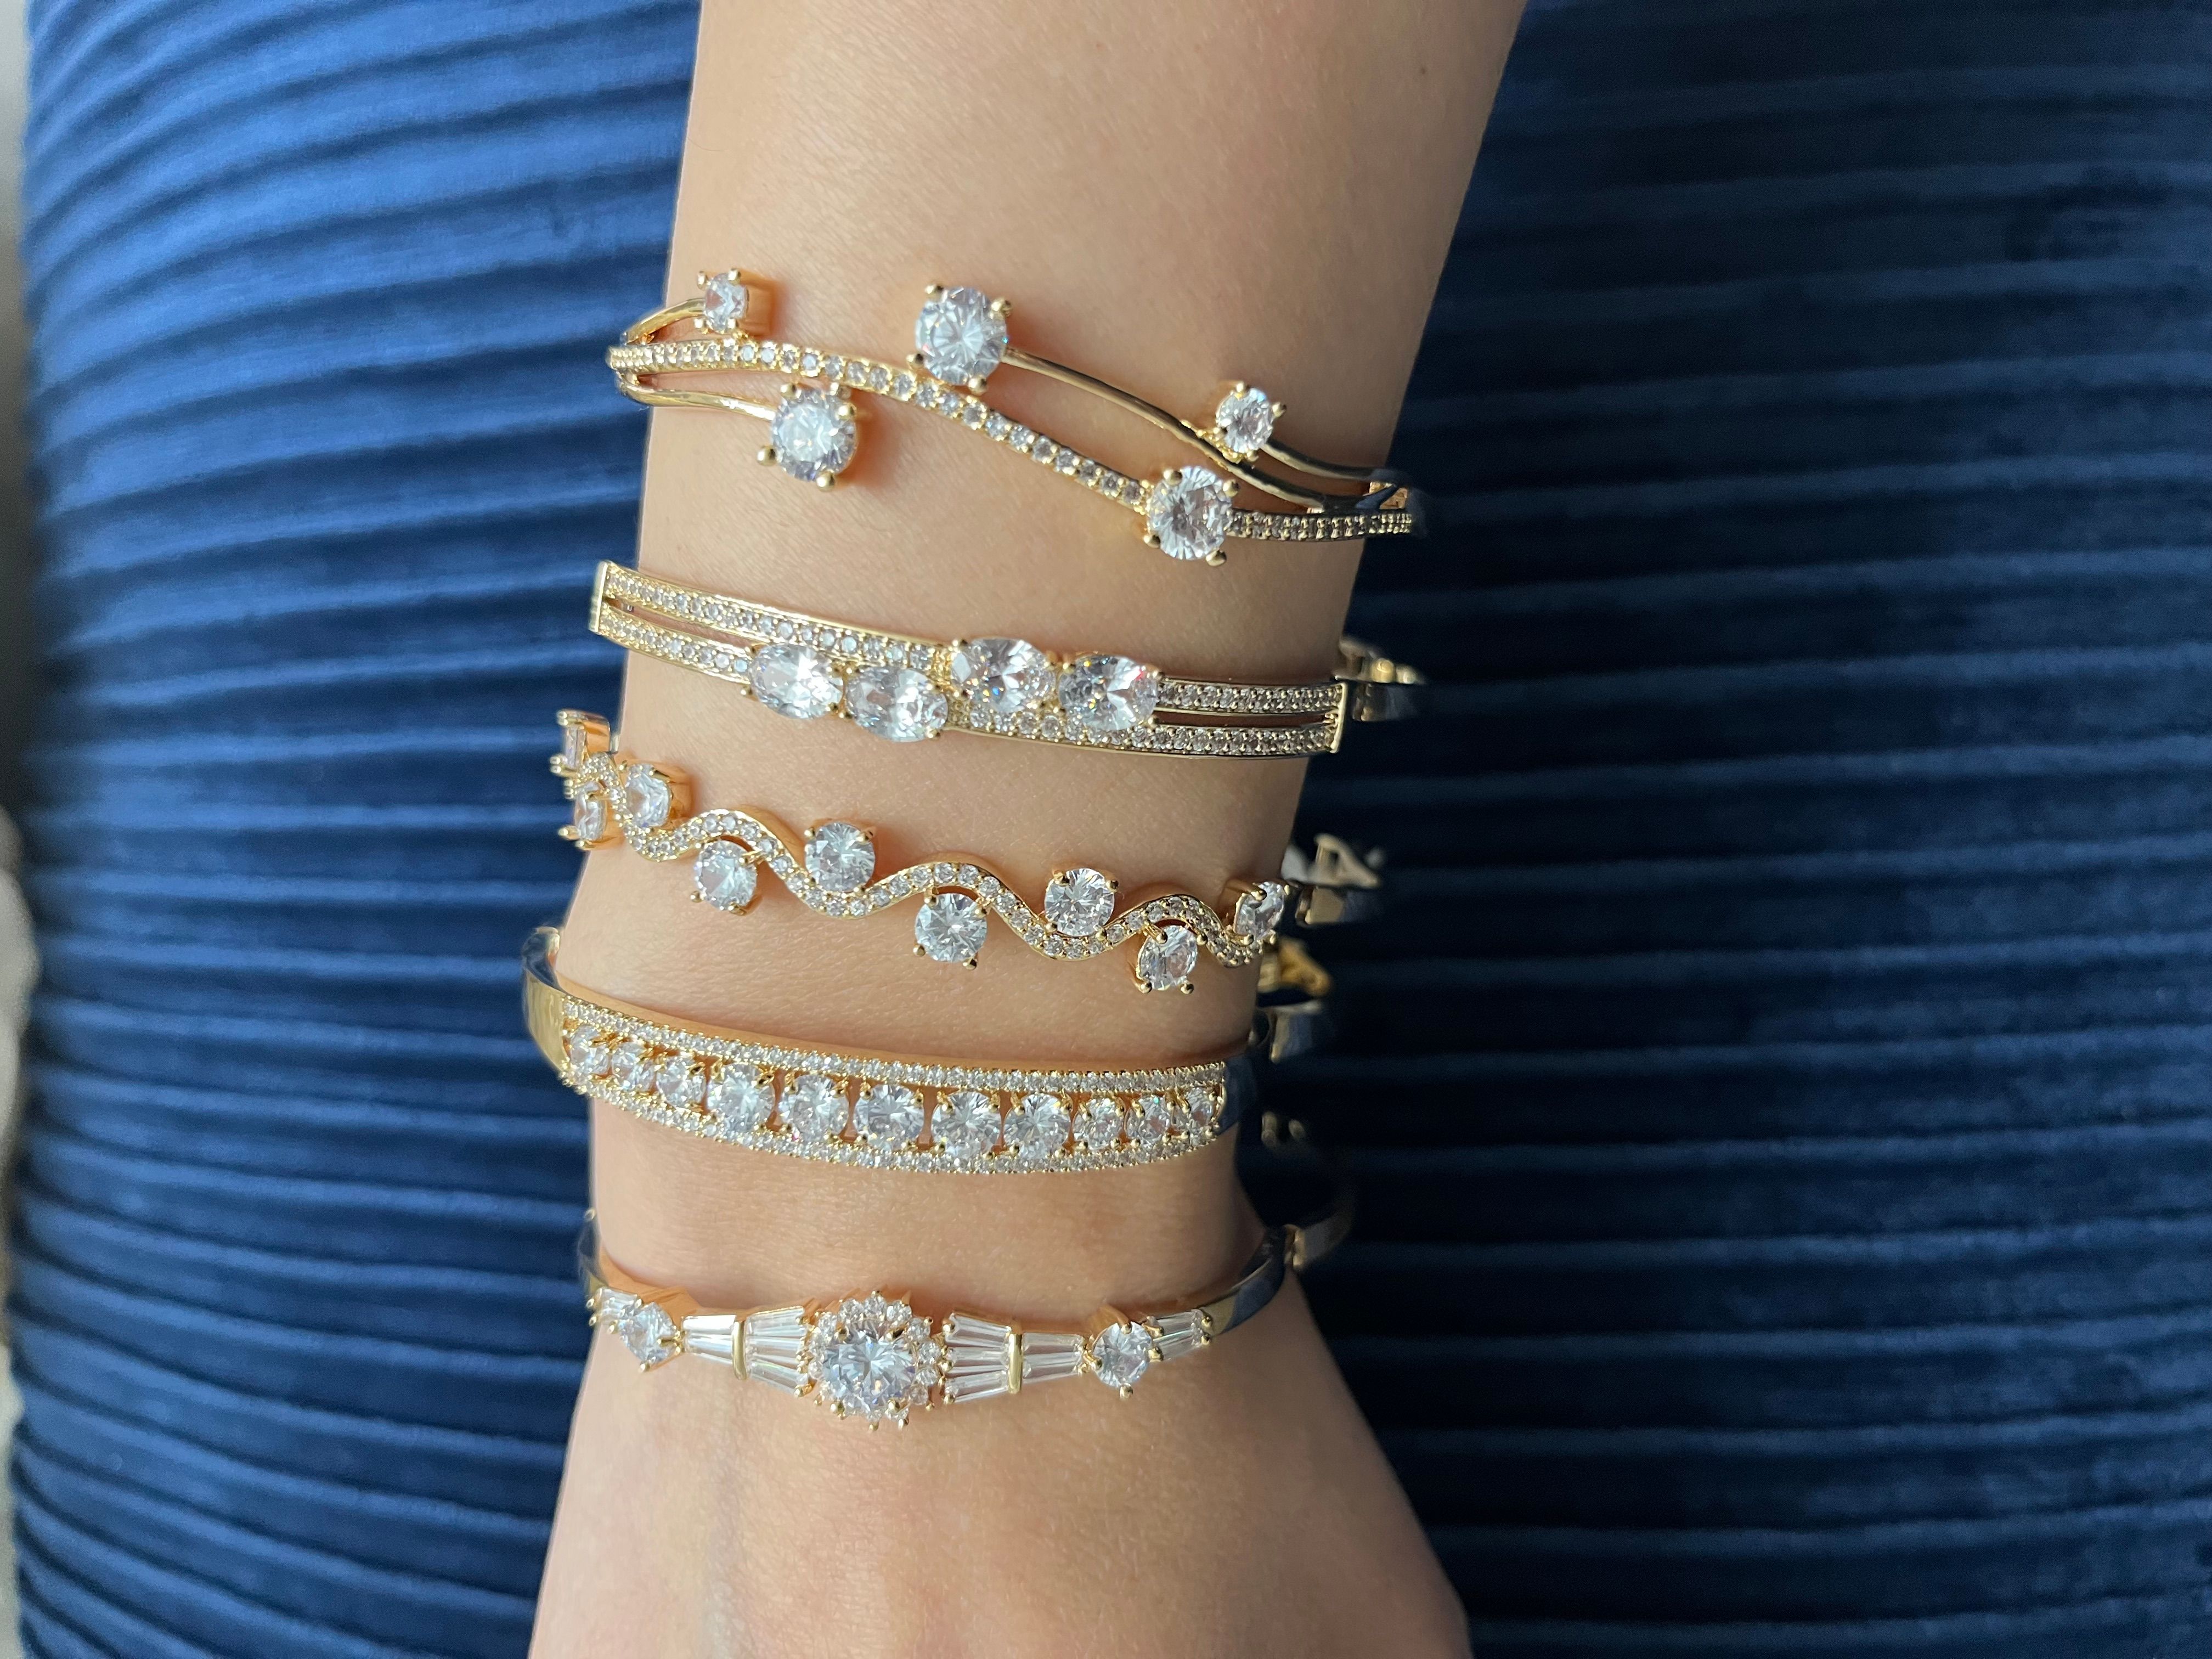 Stunning bracelets with unique designs